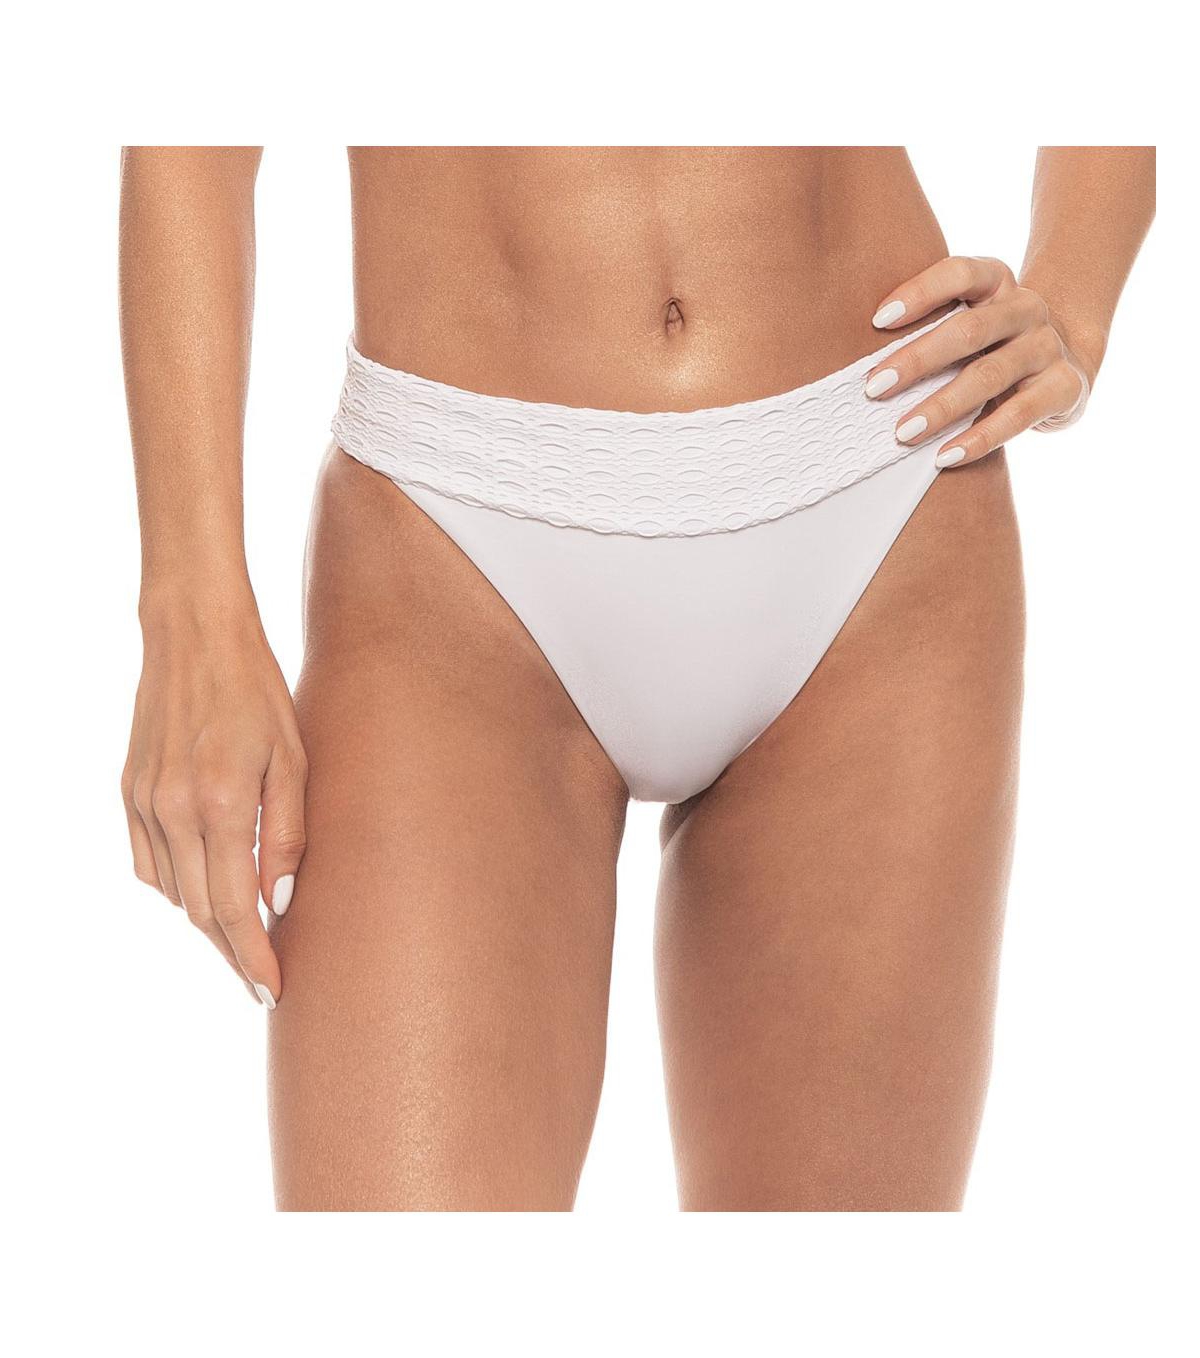 Women's Lace Overlay High Cut Banded Bikini Bottom - White